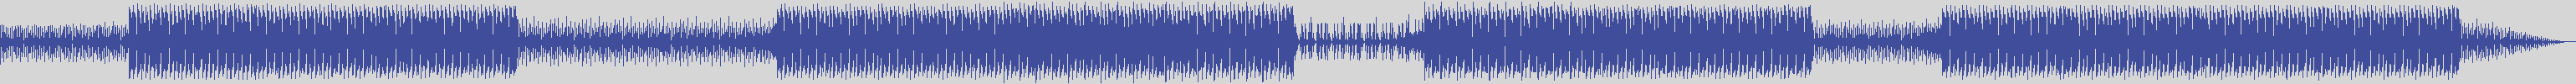 nf_boyz_records [NFY055] Mat Masusan - Matix [Extended Mix] audio wave form